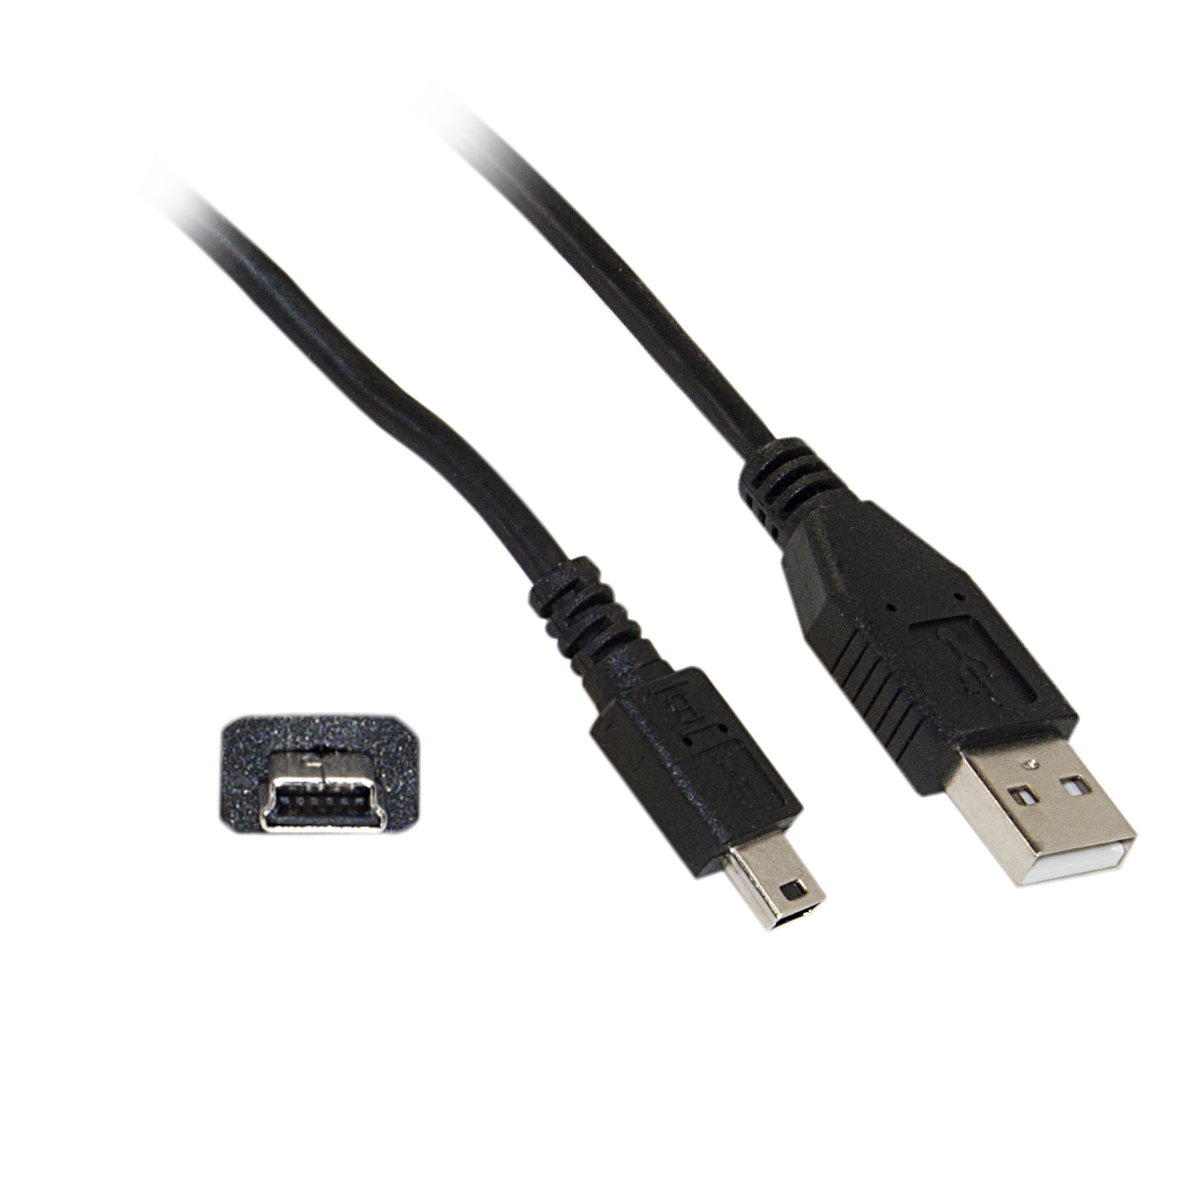 Usb 2.0 A Male To Mini B 5Pin Usb Male Converter Data Cable High Speed 30Cm KWCA 